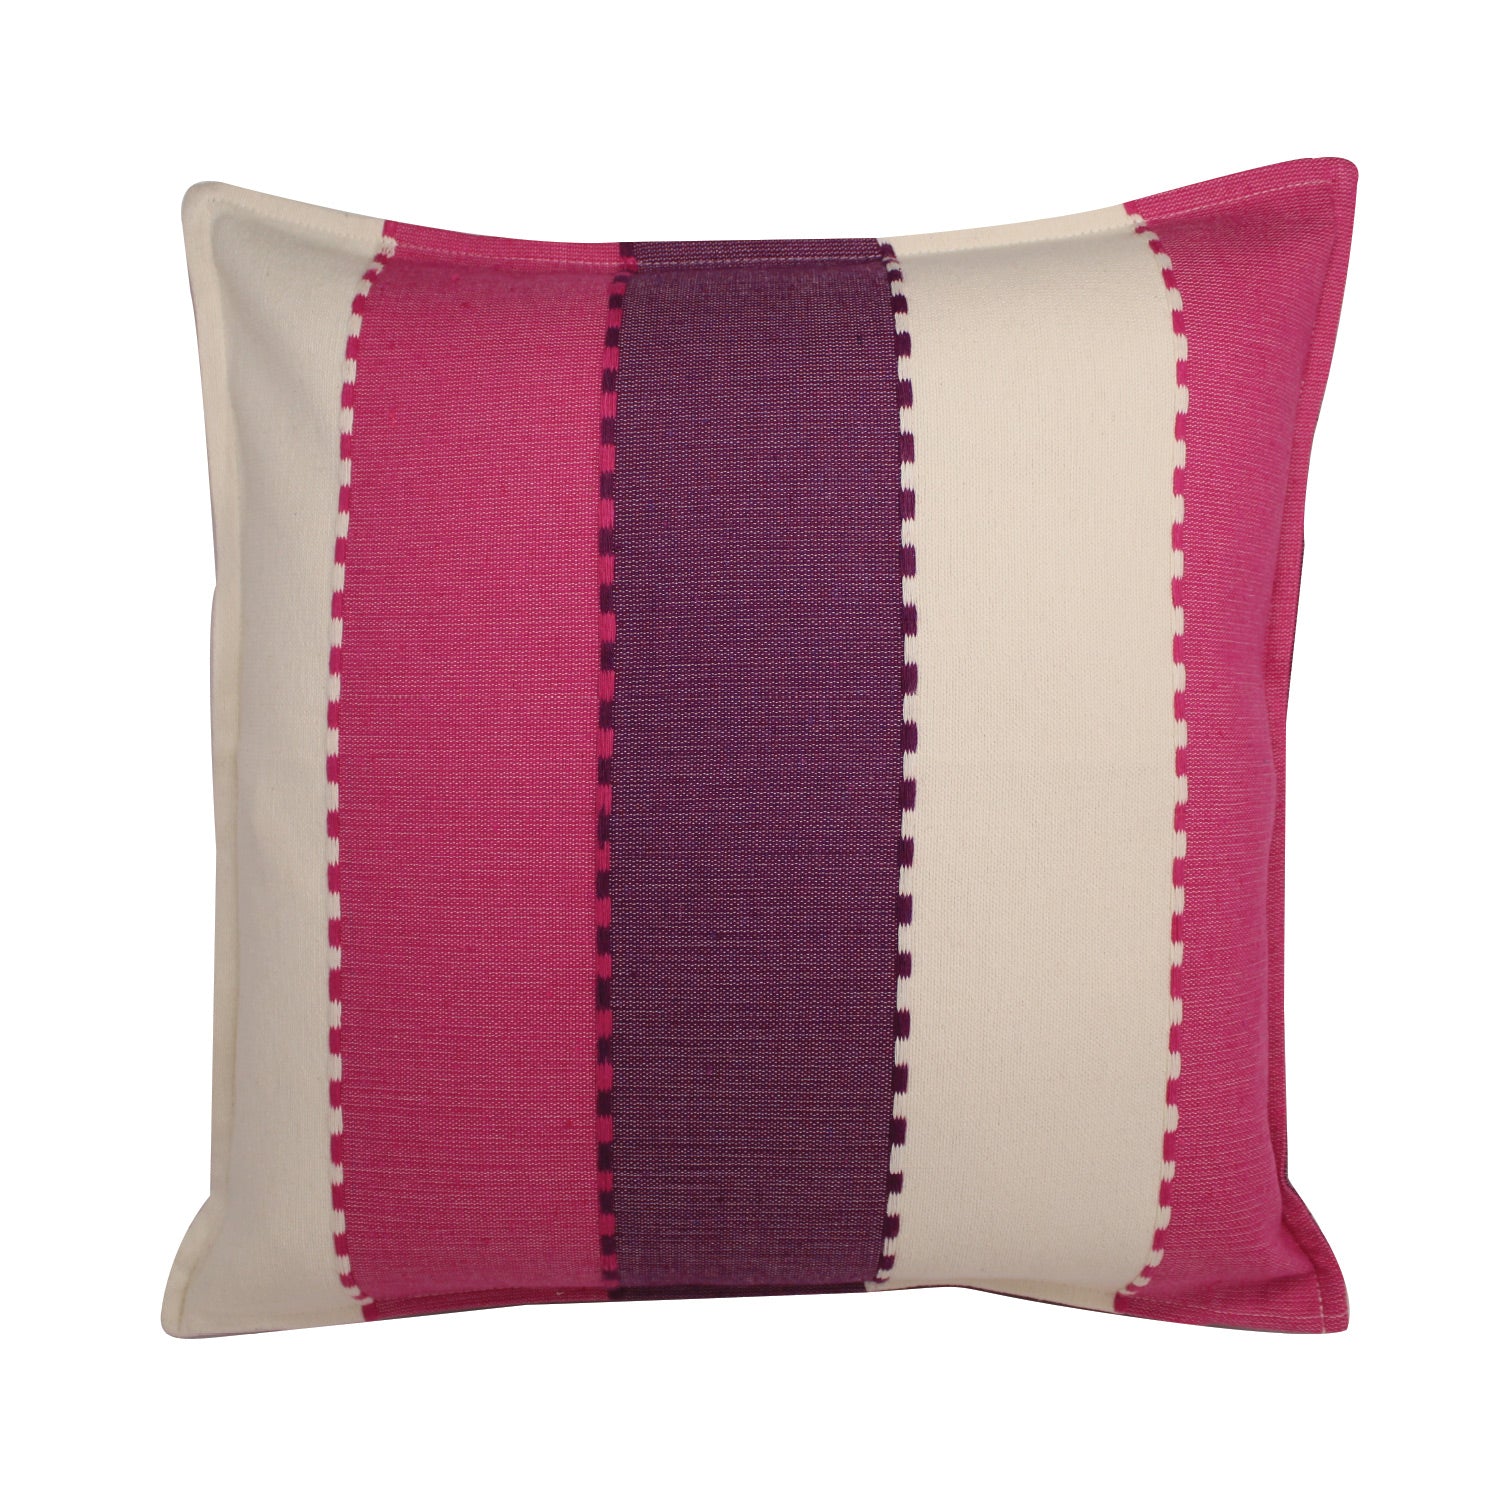 Mitla Handwoven Pillow - Pink Lavender